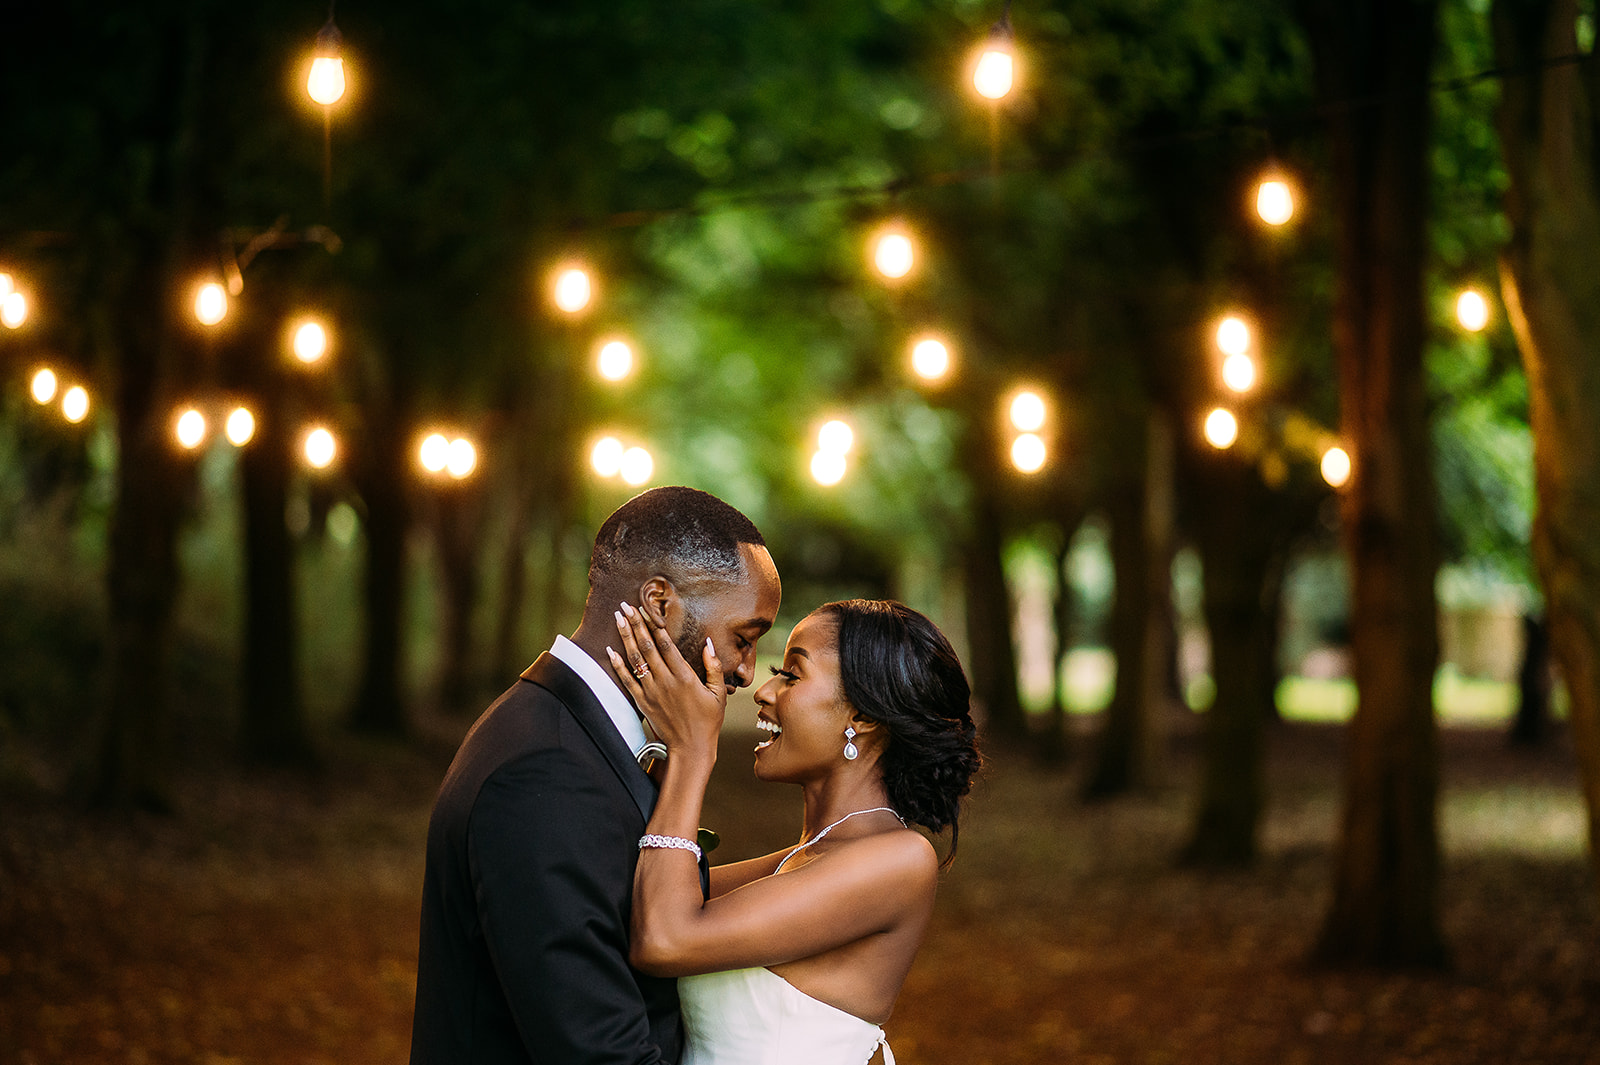 Intimate couple portrait under festoon lights on a tree lined path.